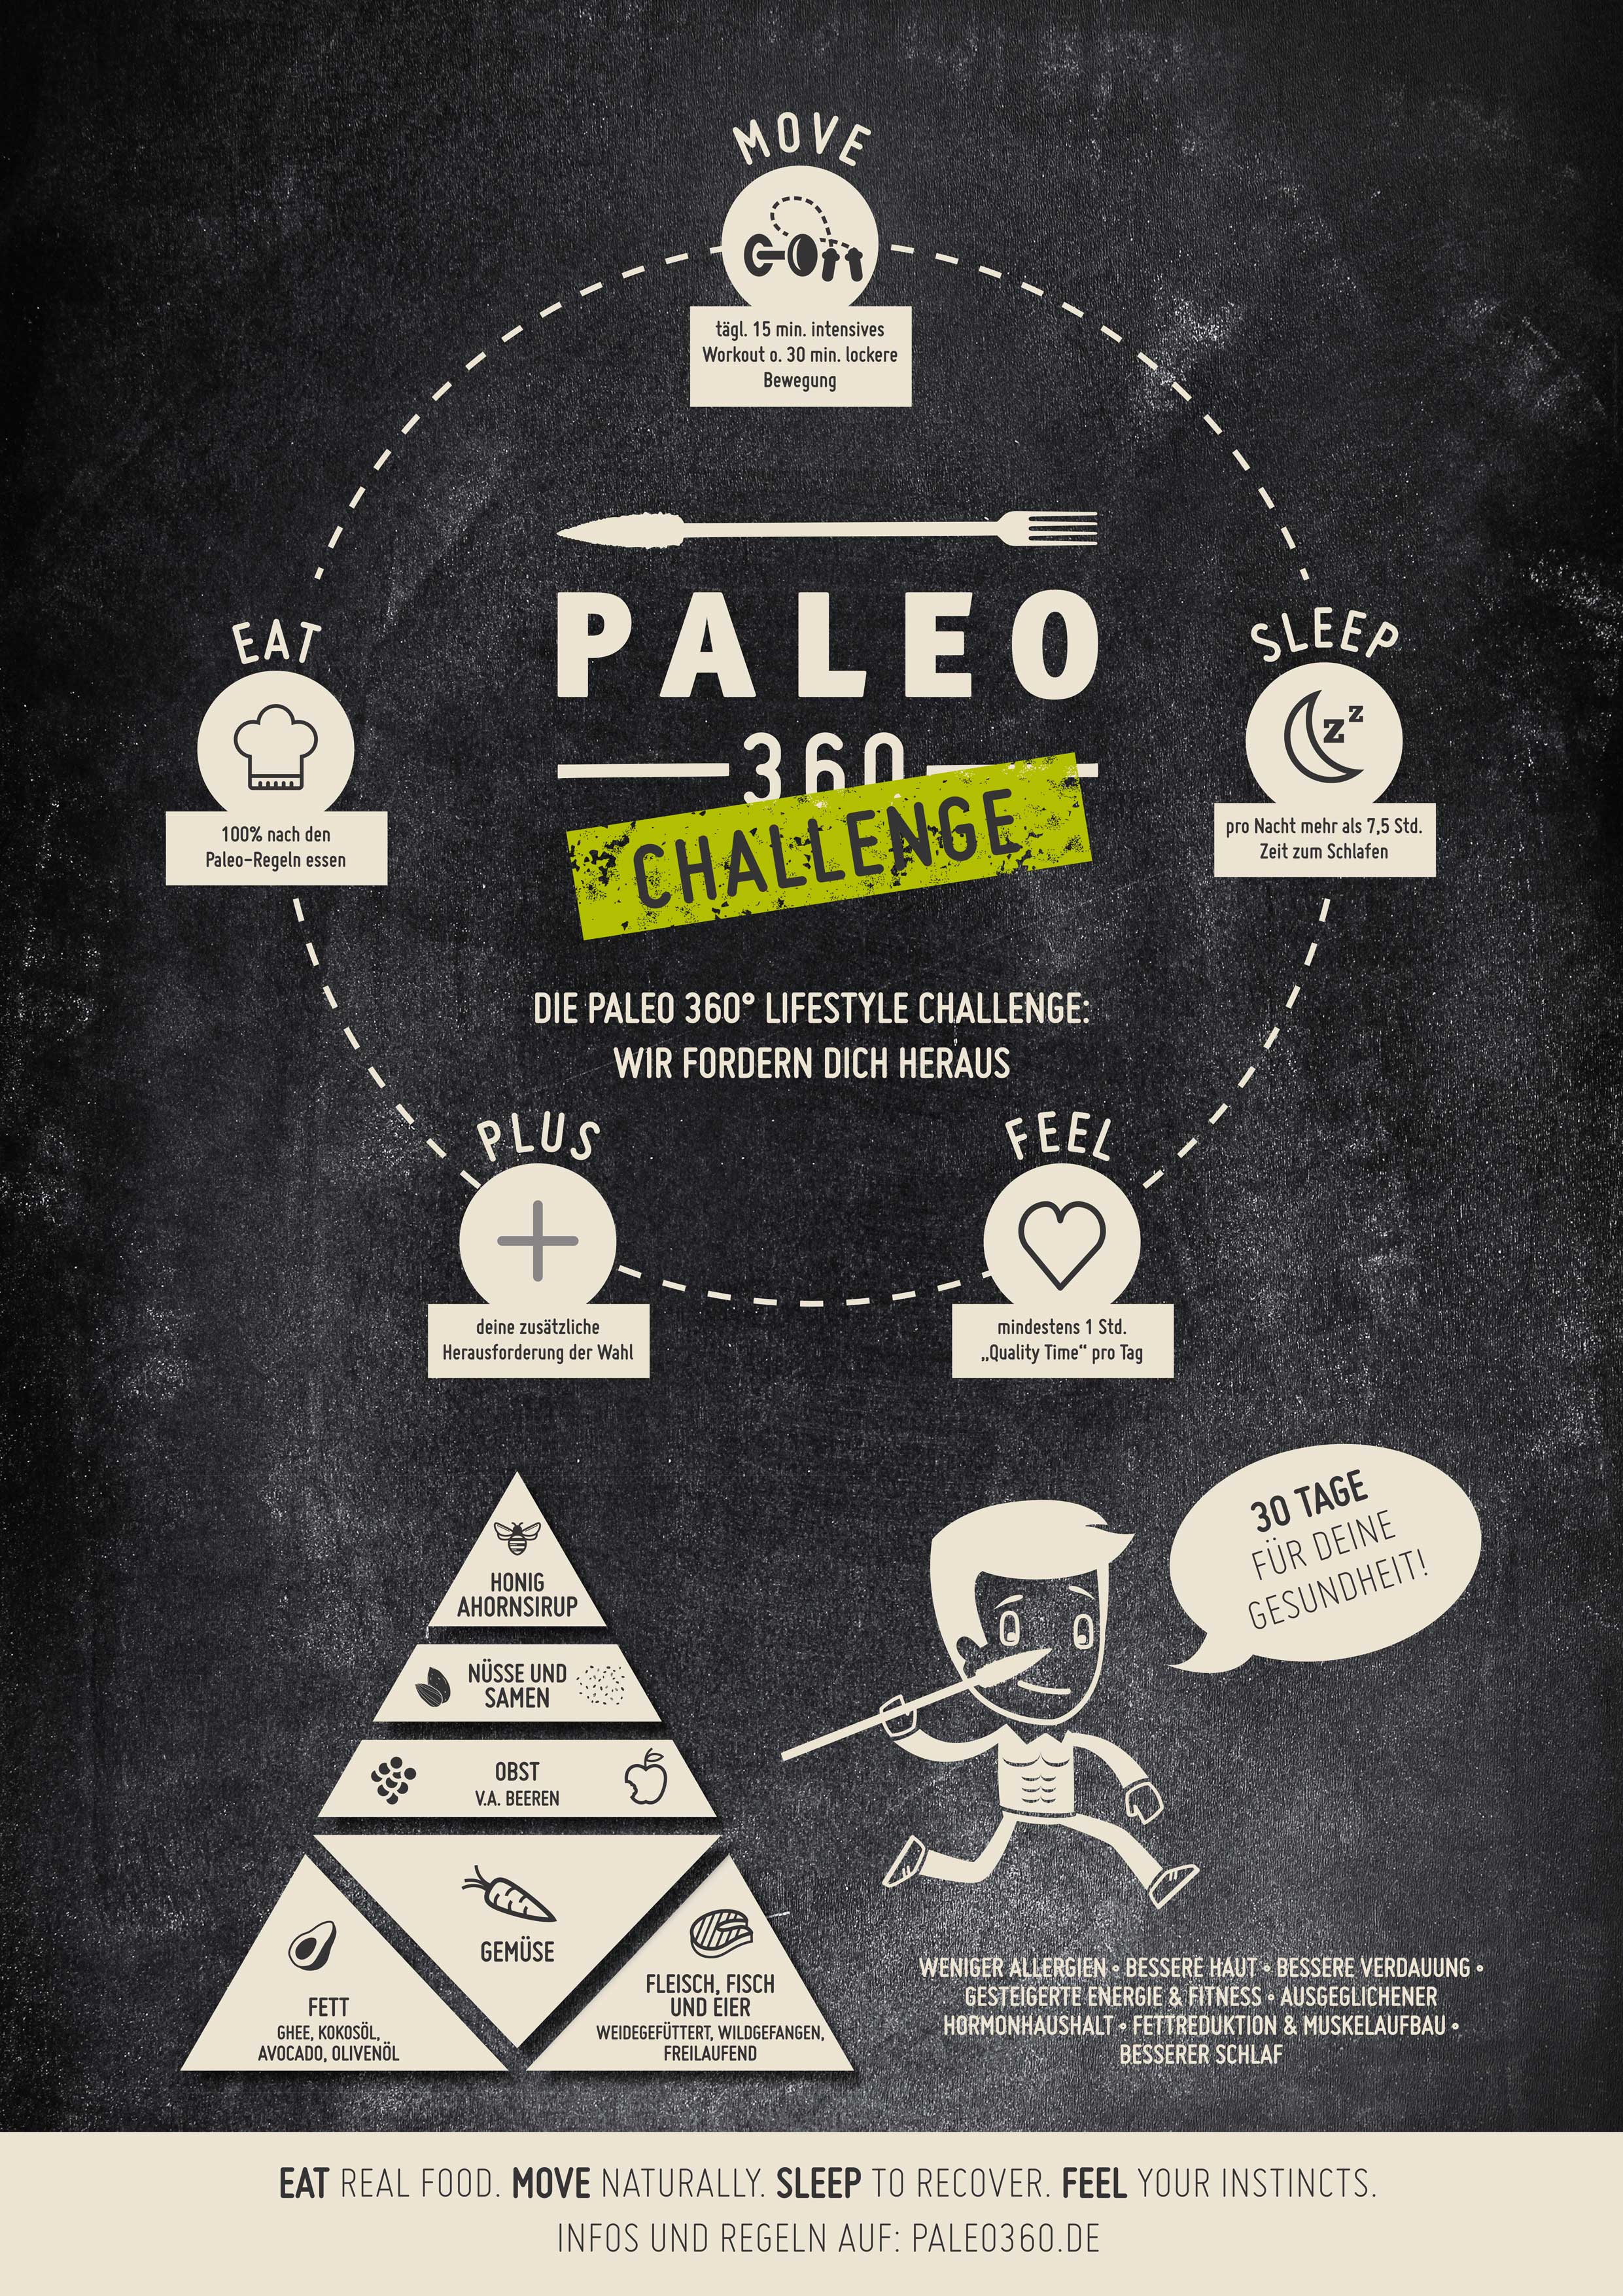 30 e Challenge Paleo360 Challenge Paleo360 De